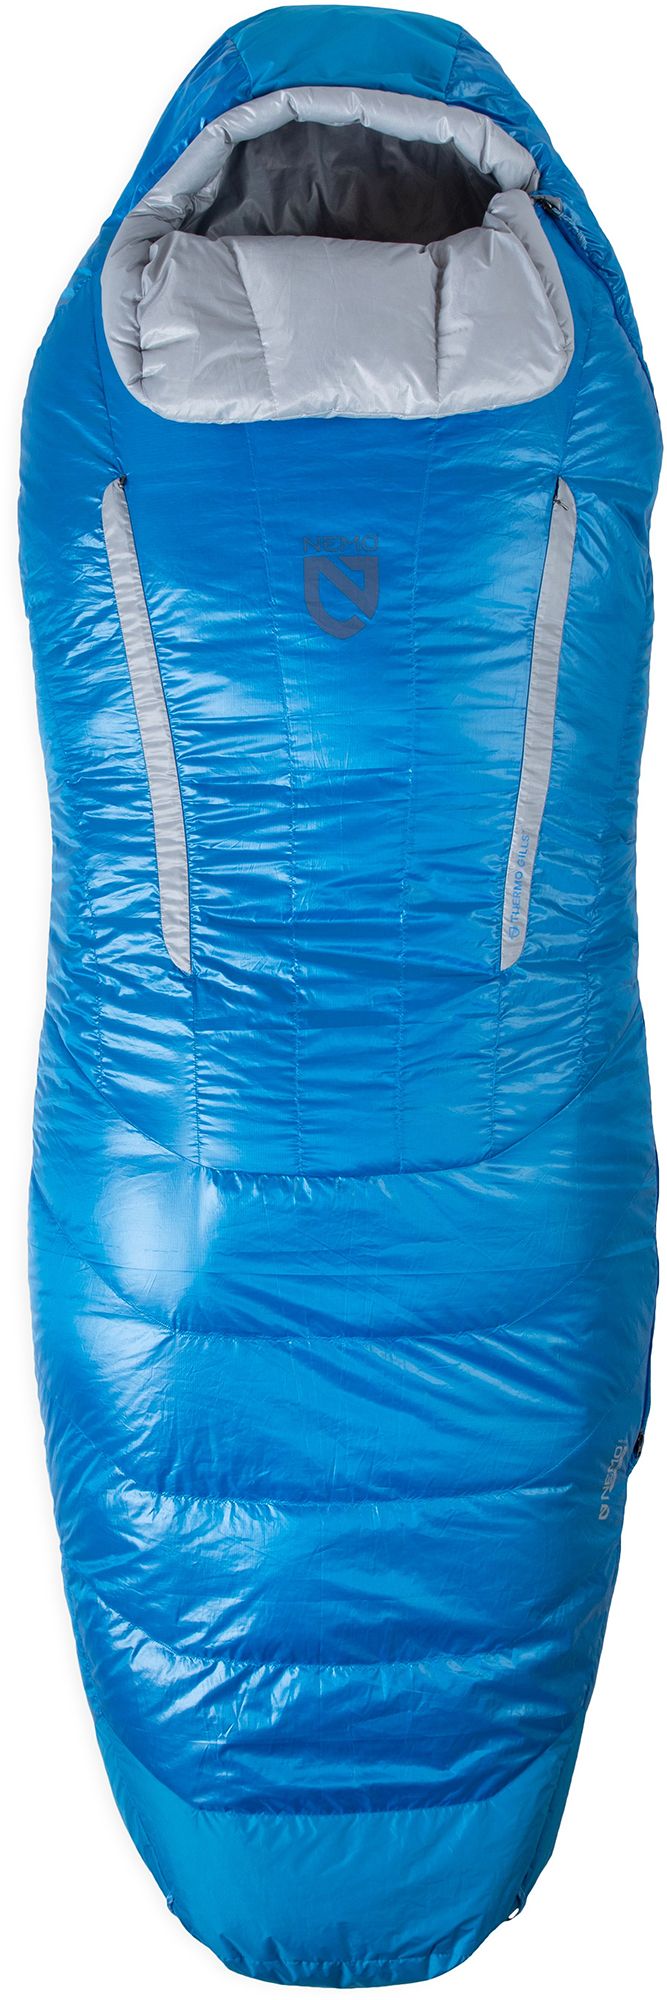 Photos - Suitcase / Backpack Cover Nemo Men's Endless Promise 30 Down Sleeping Bag, Regular, Brilliant Blue 2 